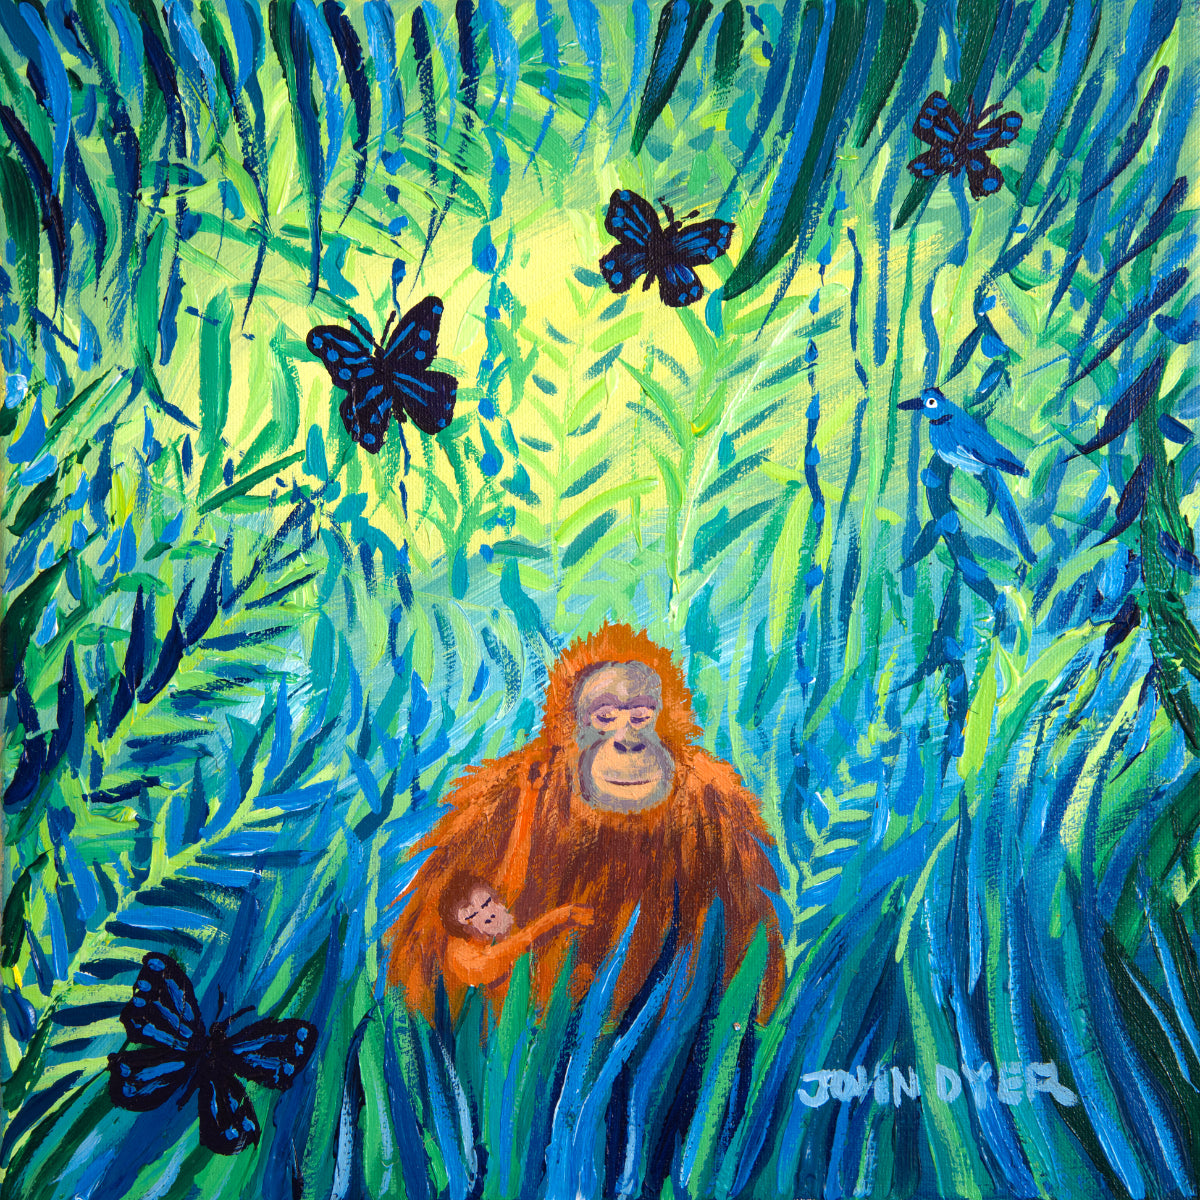 John Dyer Painting. Mother and Child, Borneo Orangutans